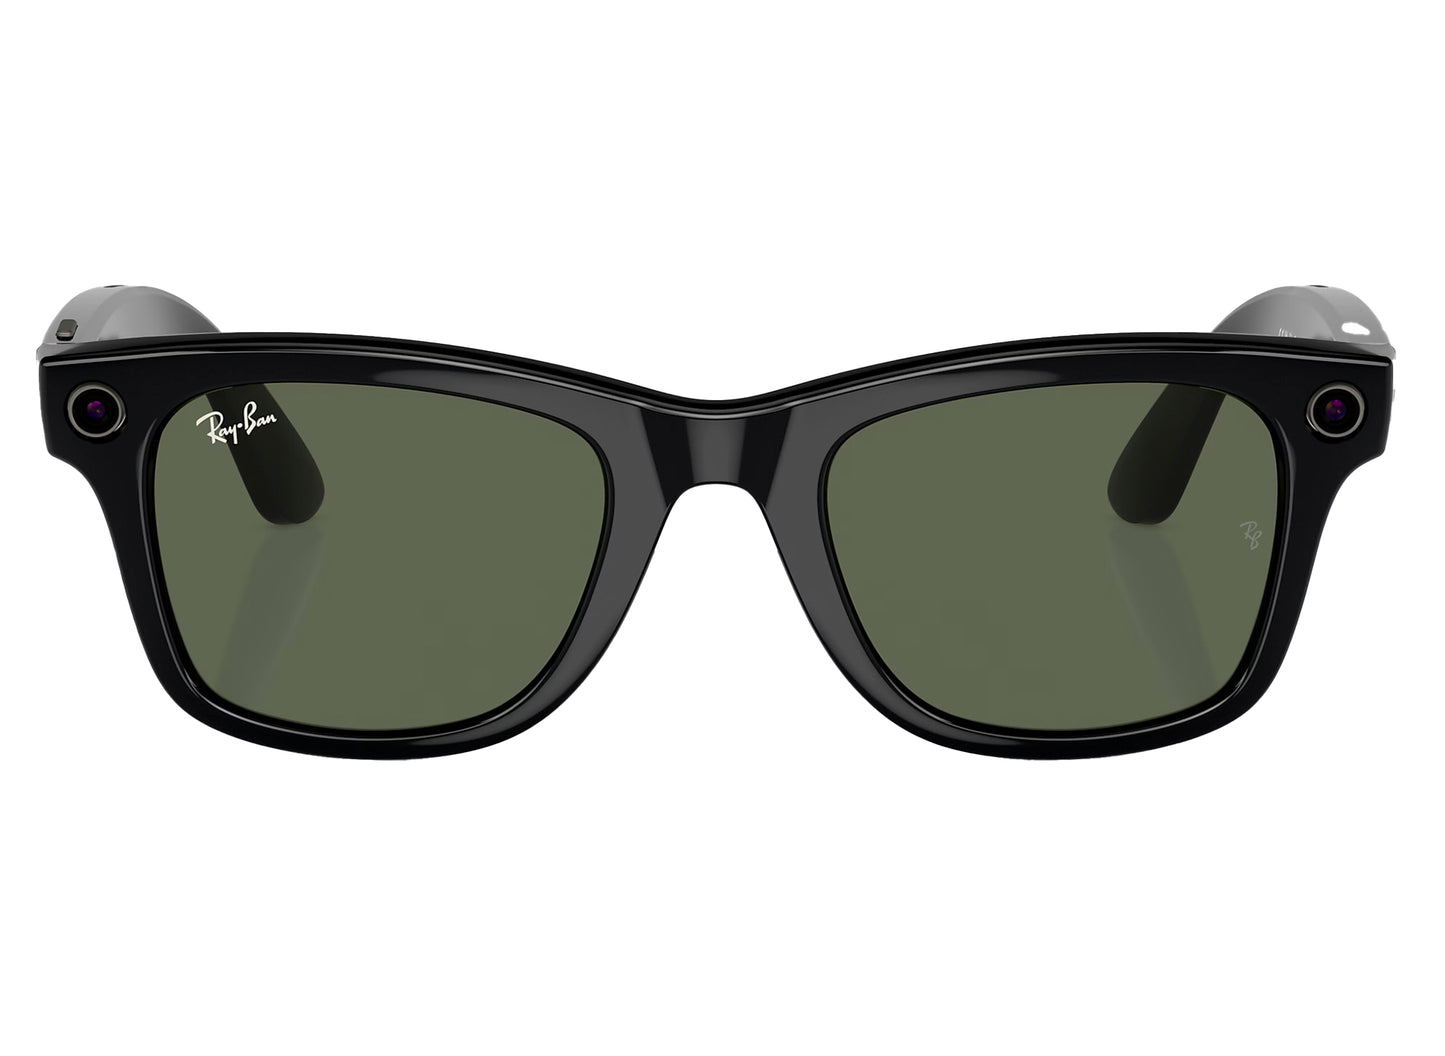 Ray-Ban Meta Headliner in Shiny Black w/ Polarized Green Lenses xld